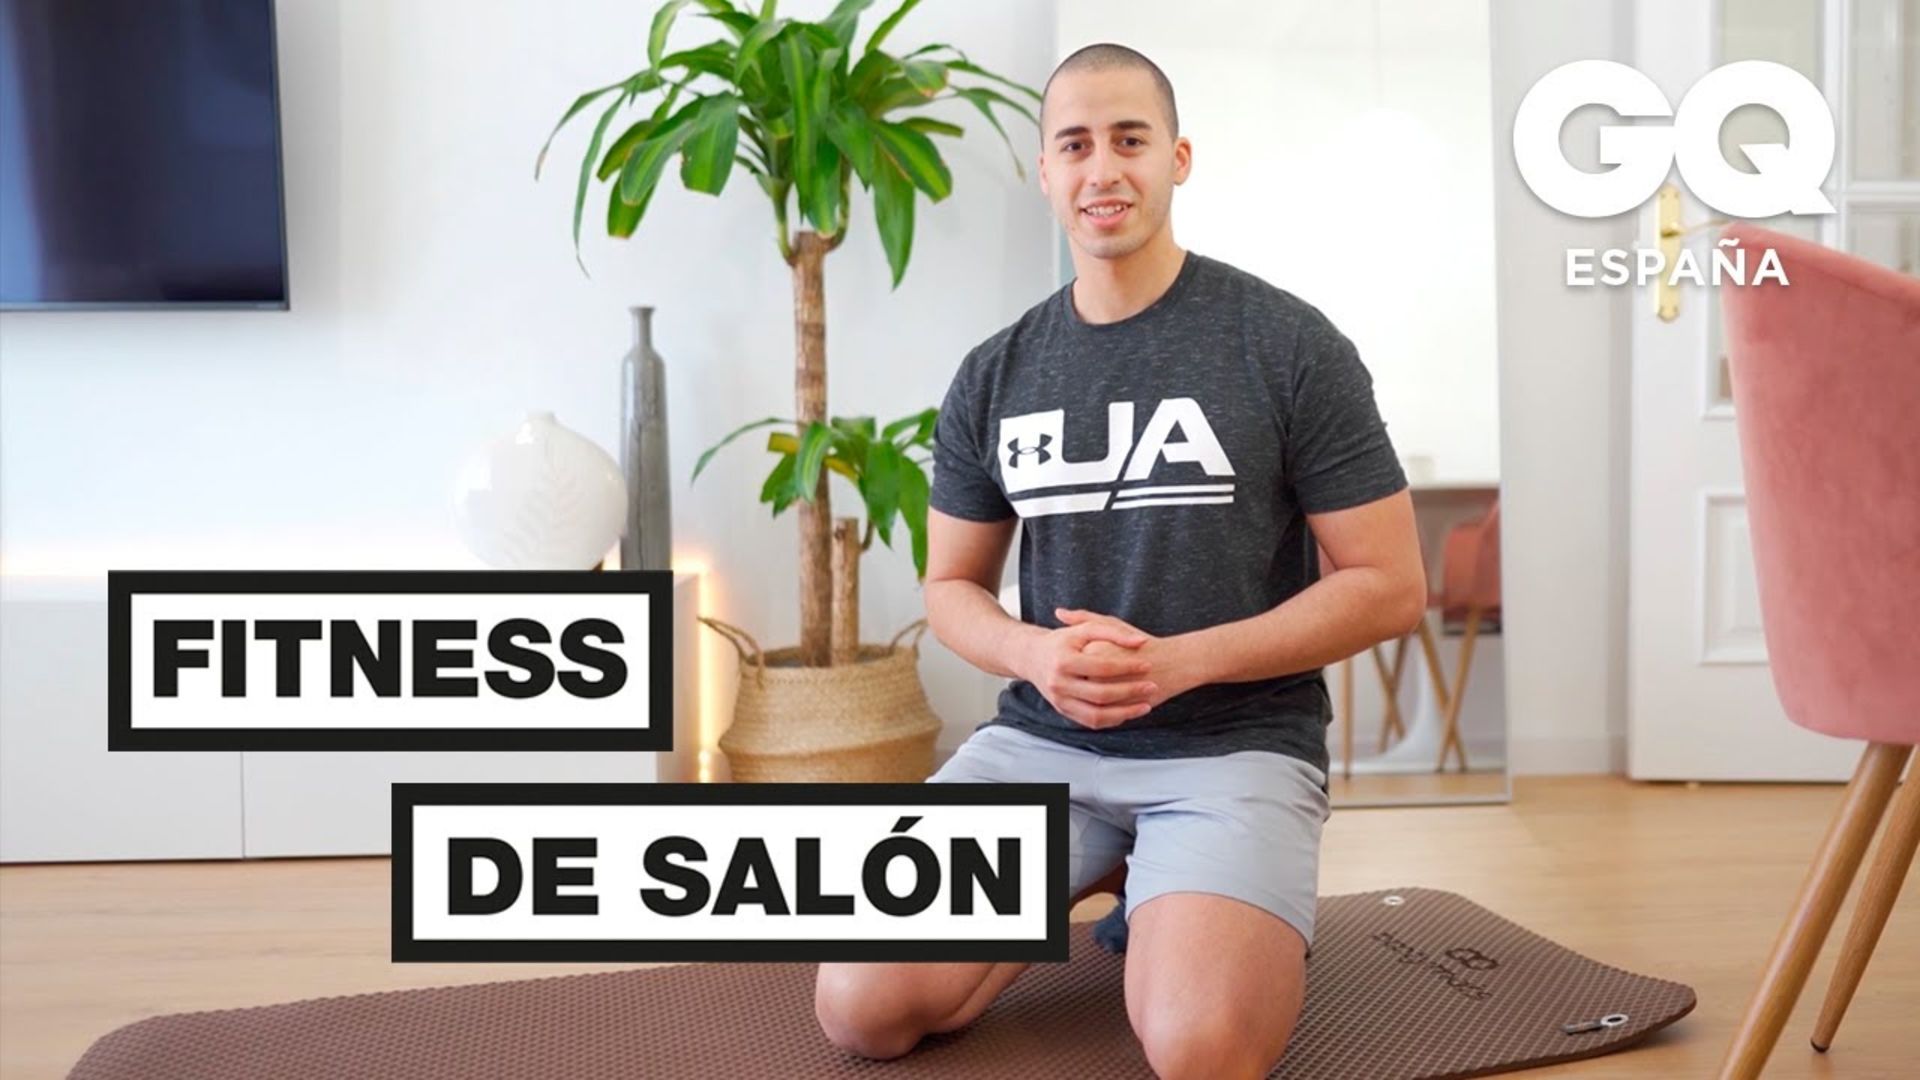 Watch Flexiones, Ammar Montaser | Fitness de salón | Fitness de Salón | GQ España